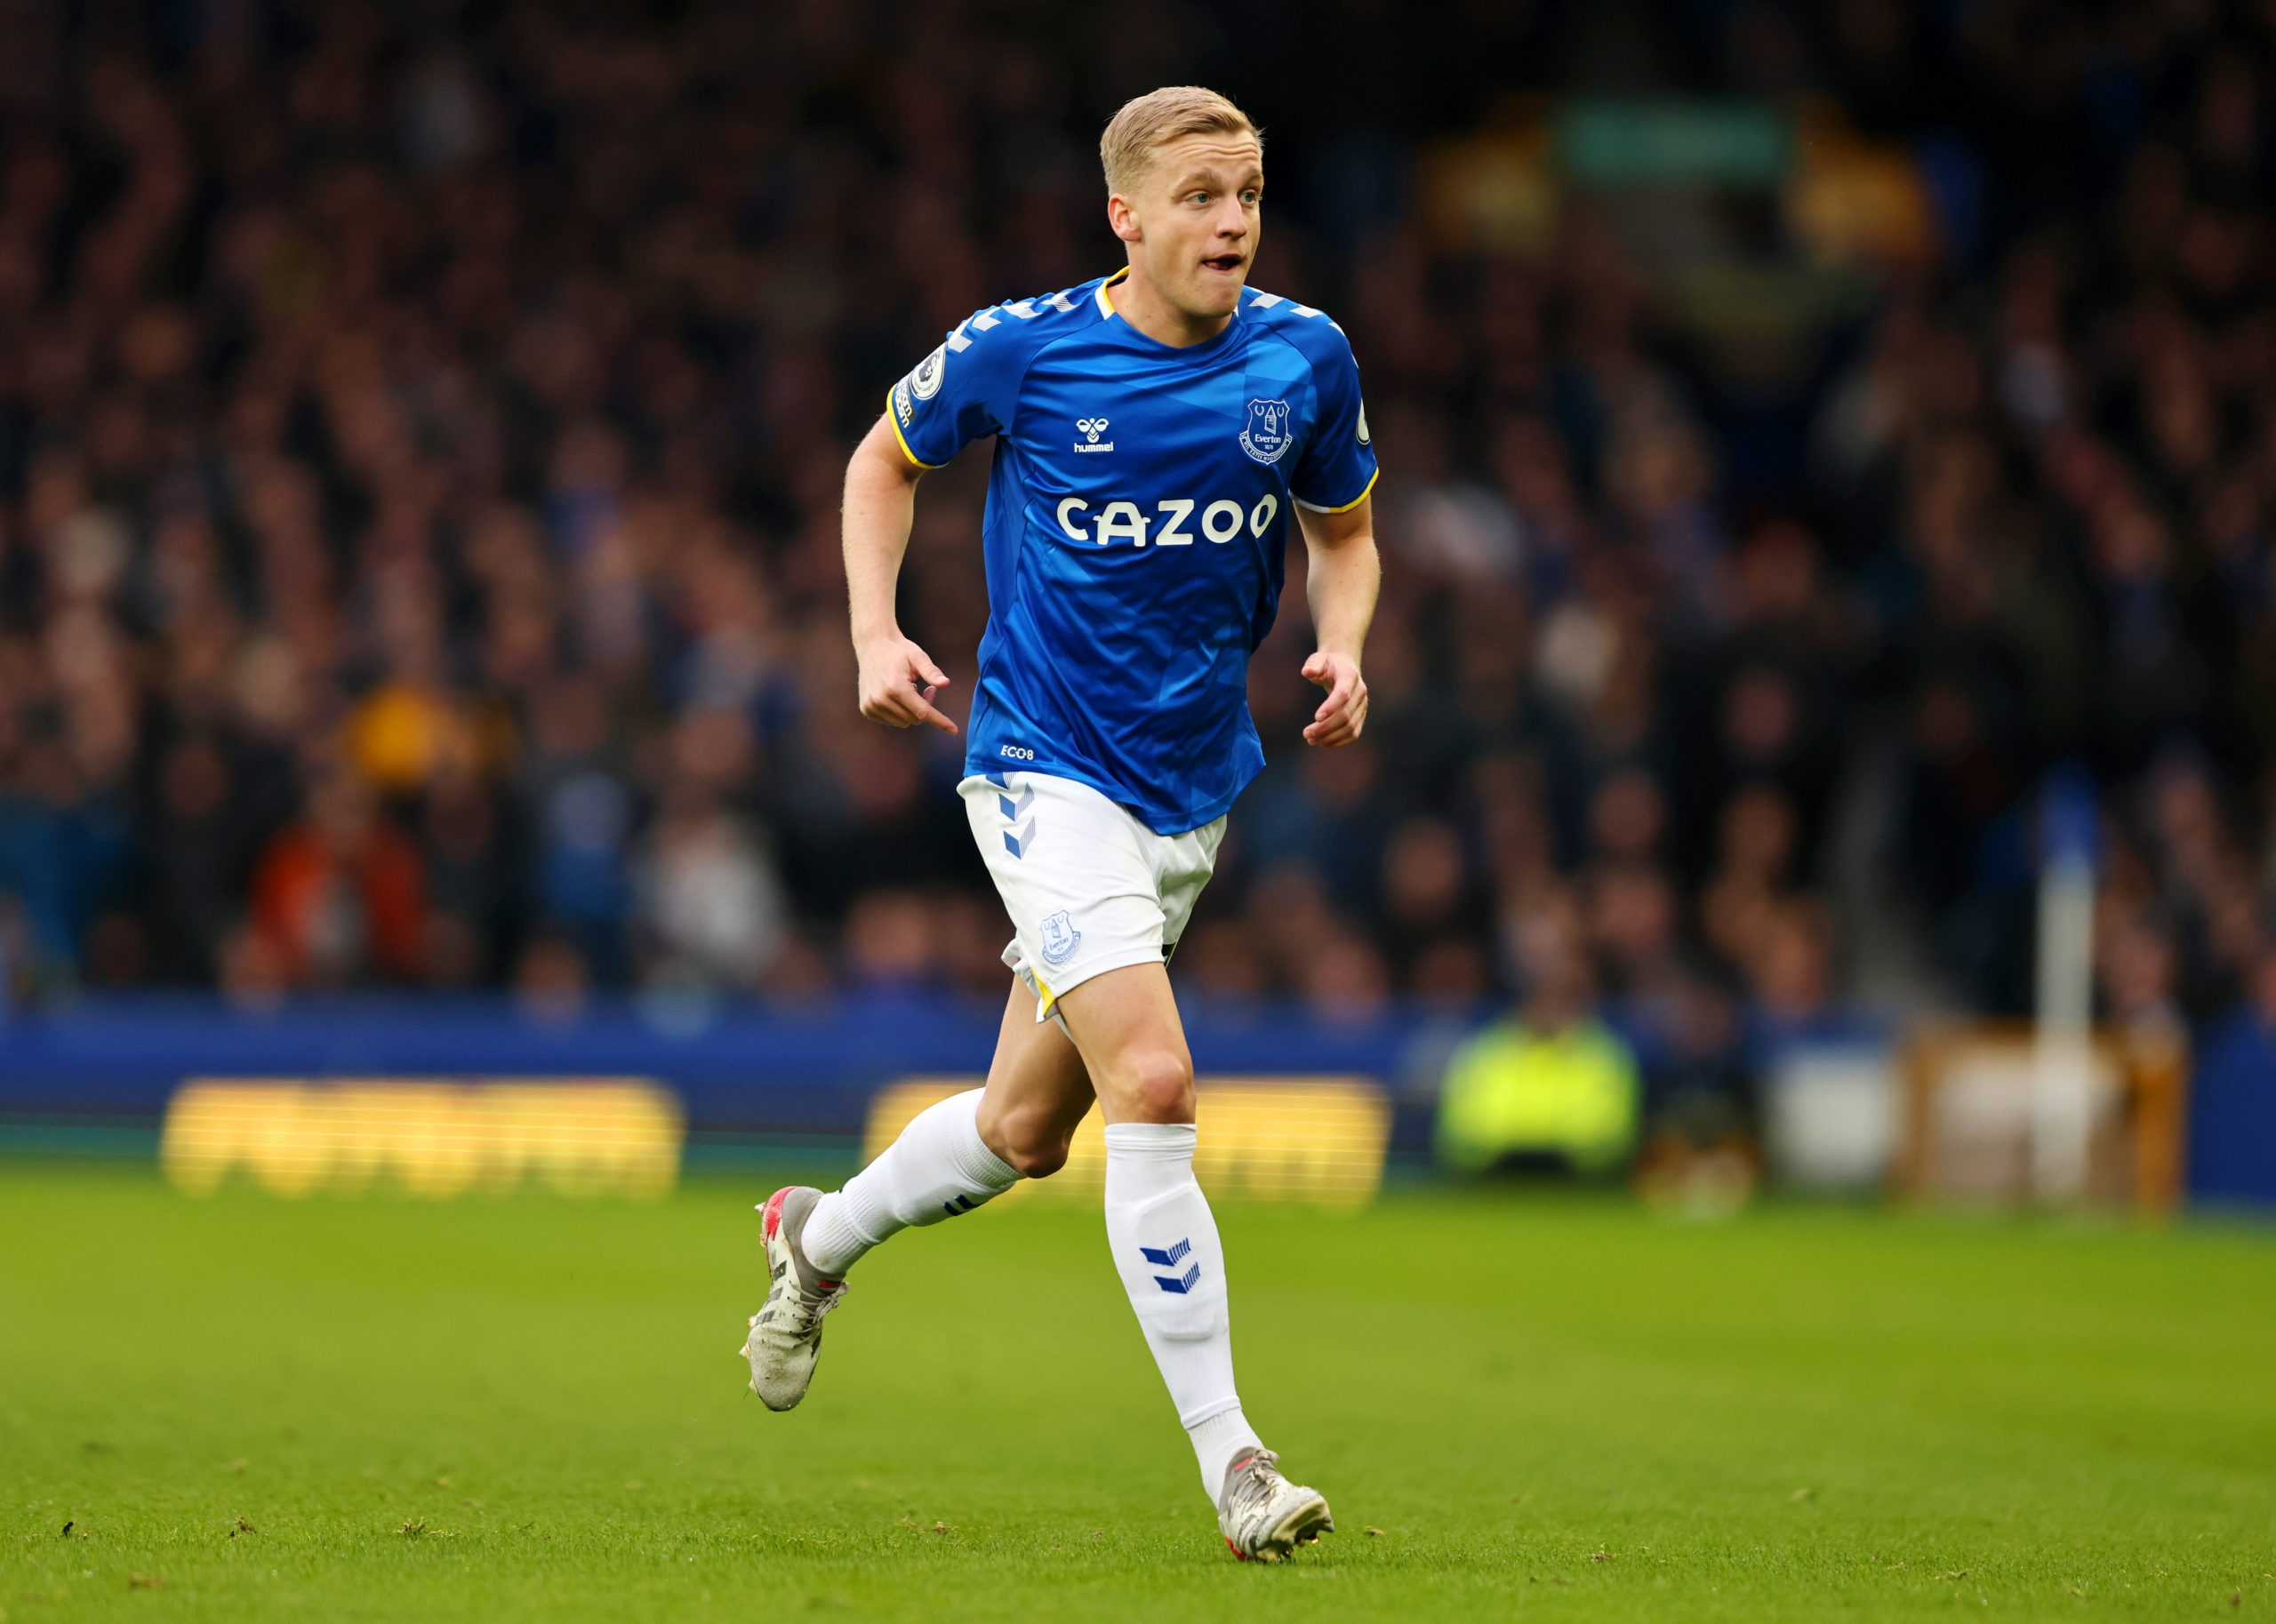 Donny van de Beek on loan at Everton last season. (Photo by Marc Atkins/Getty Images)